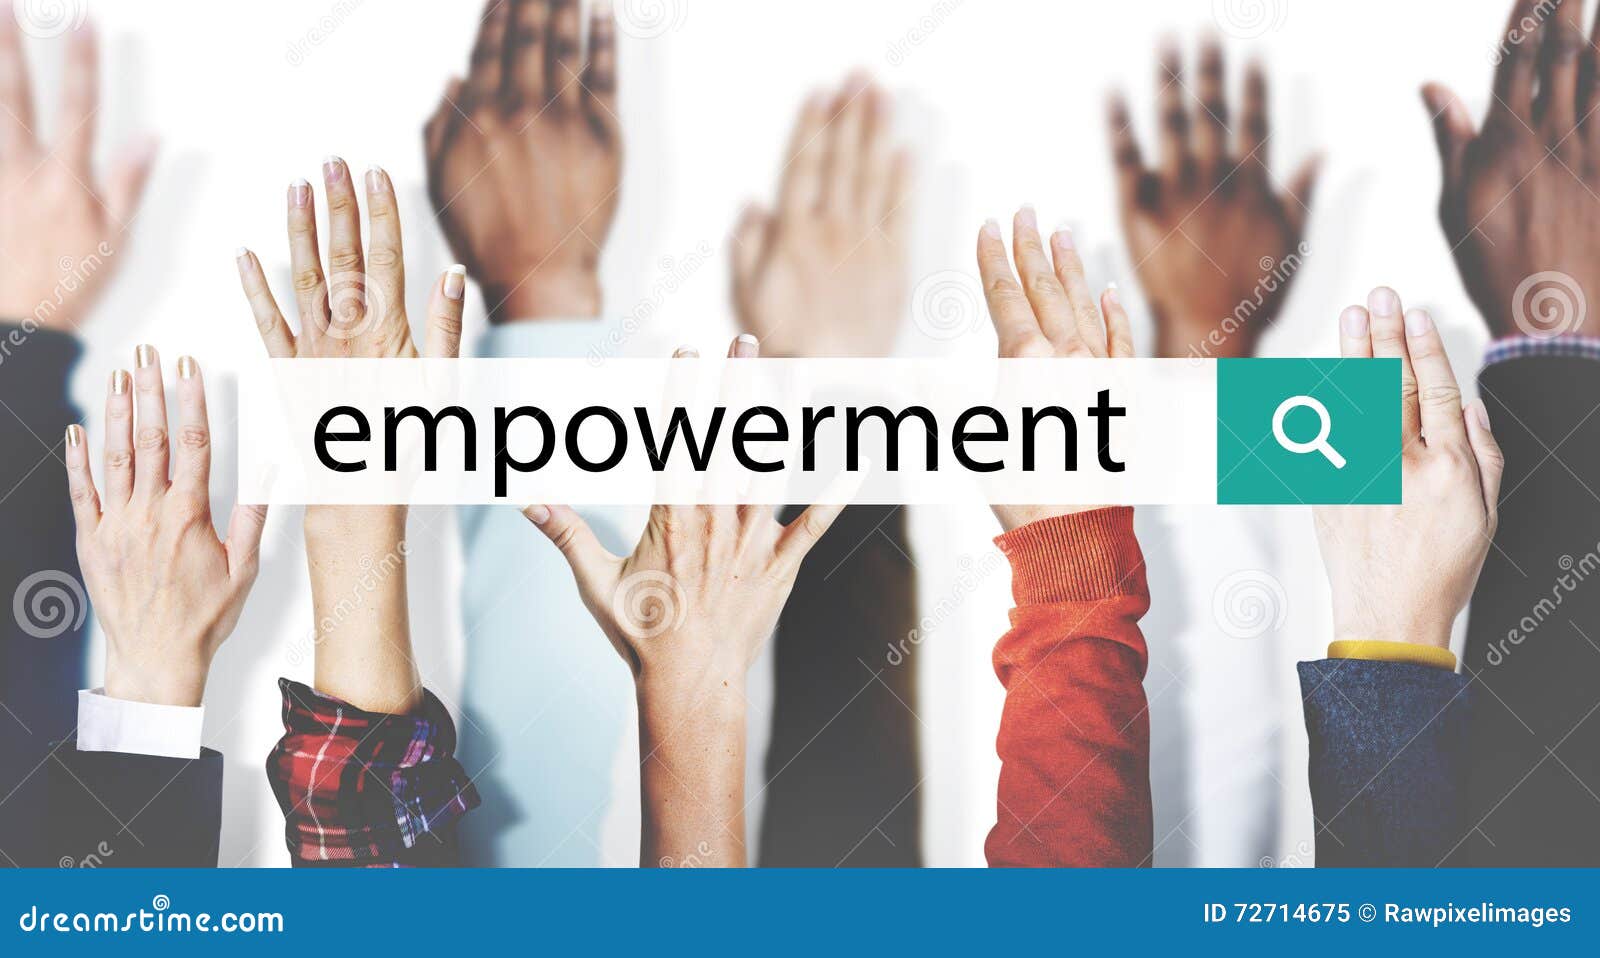 empowerment motivate inspire lead concept